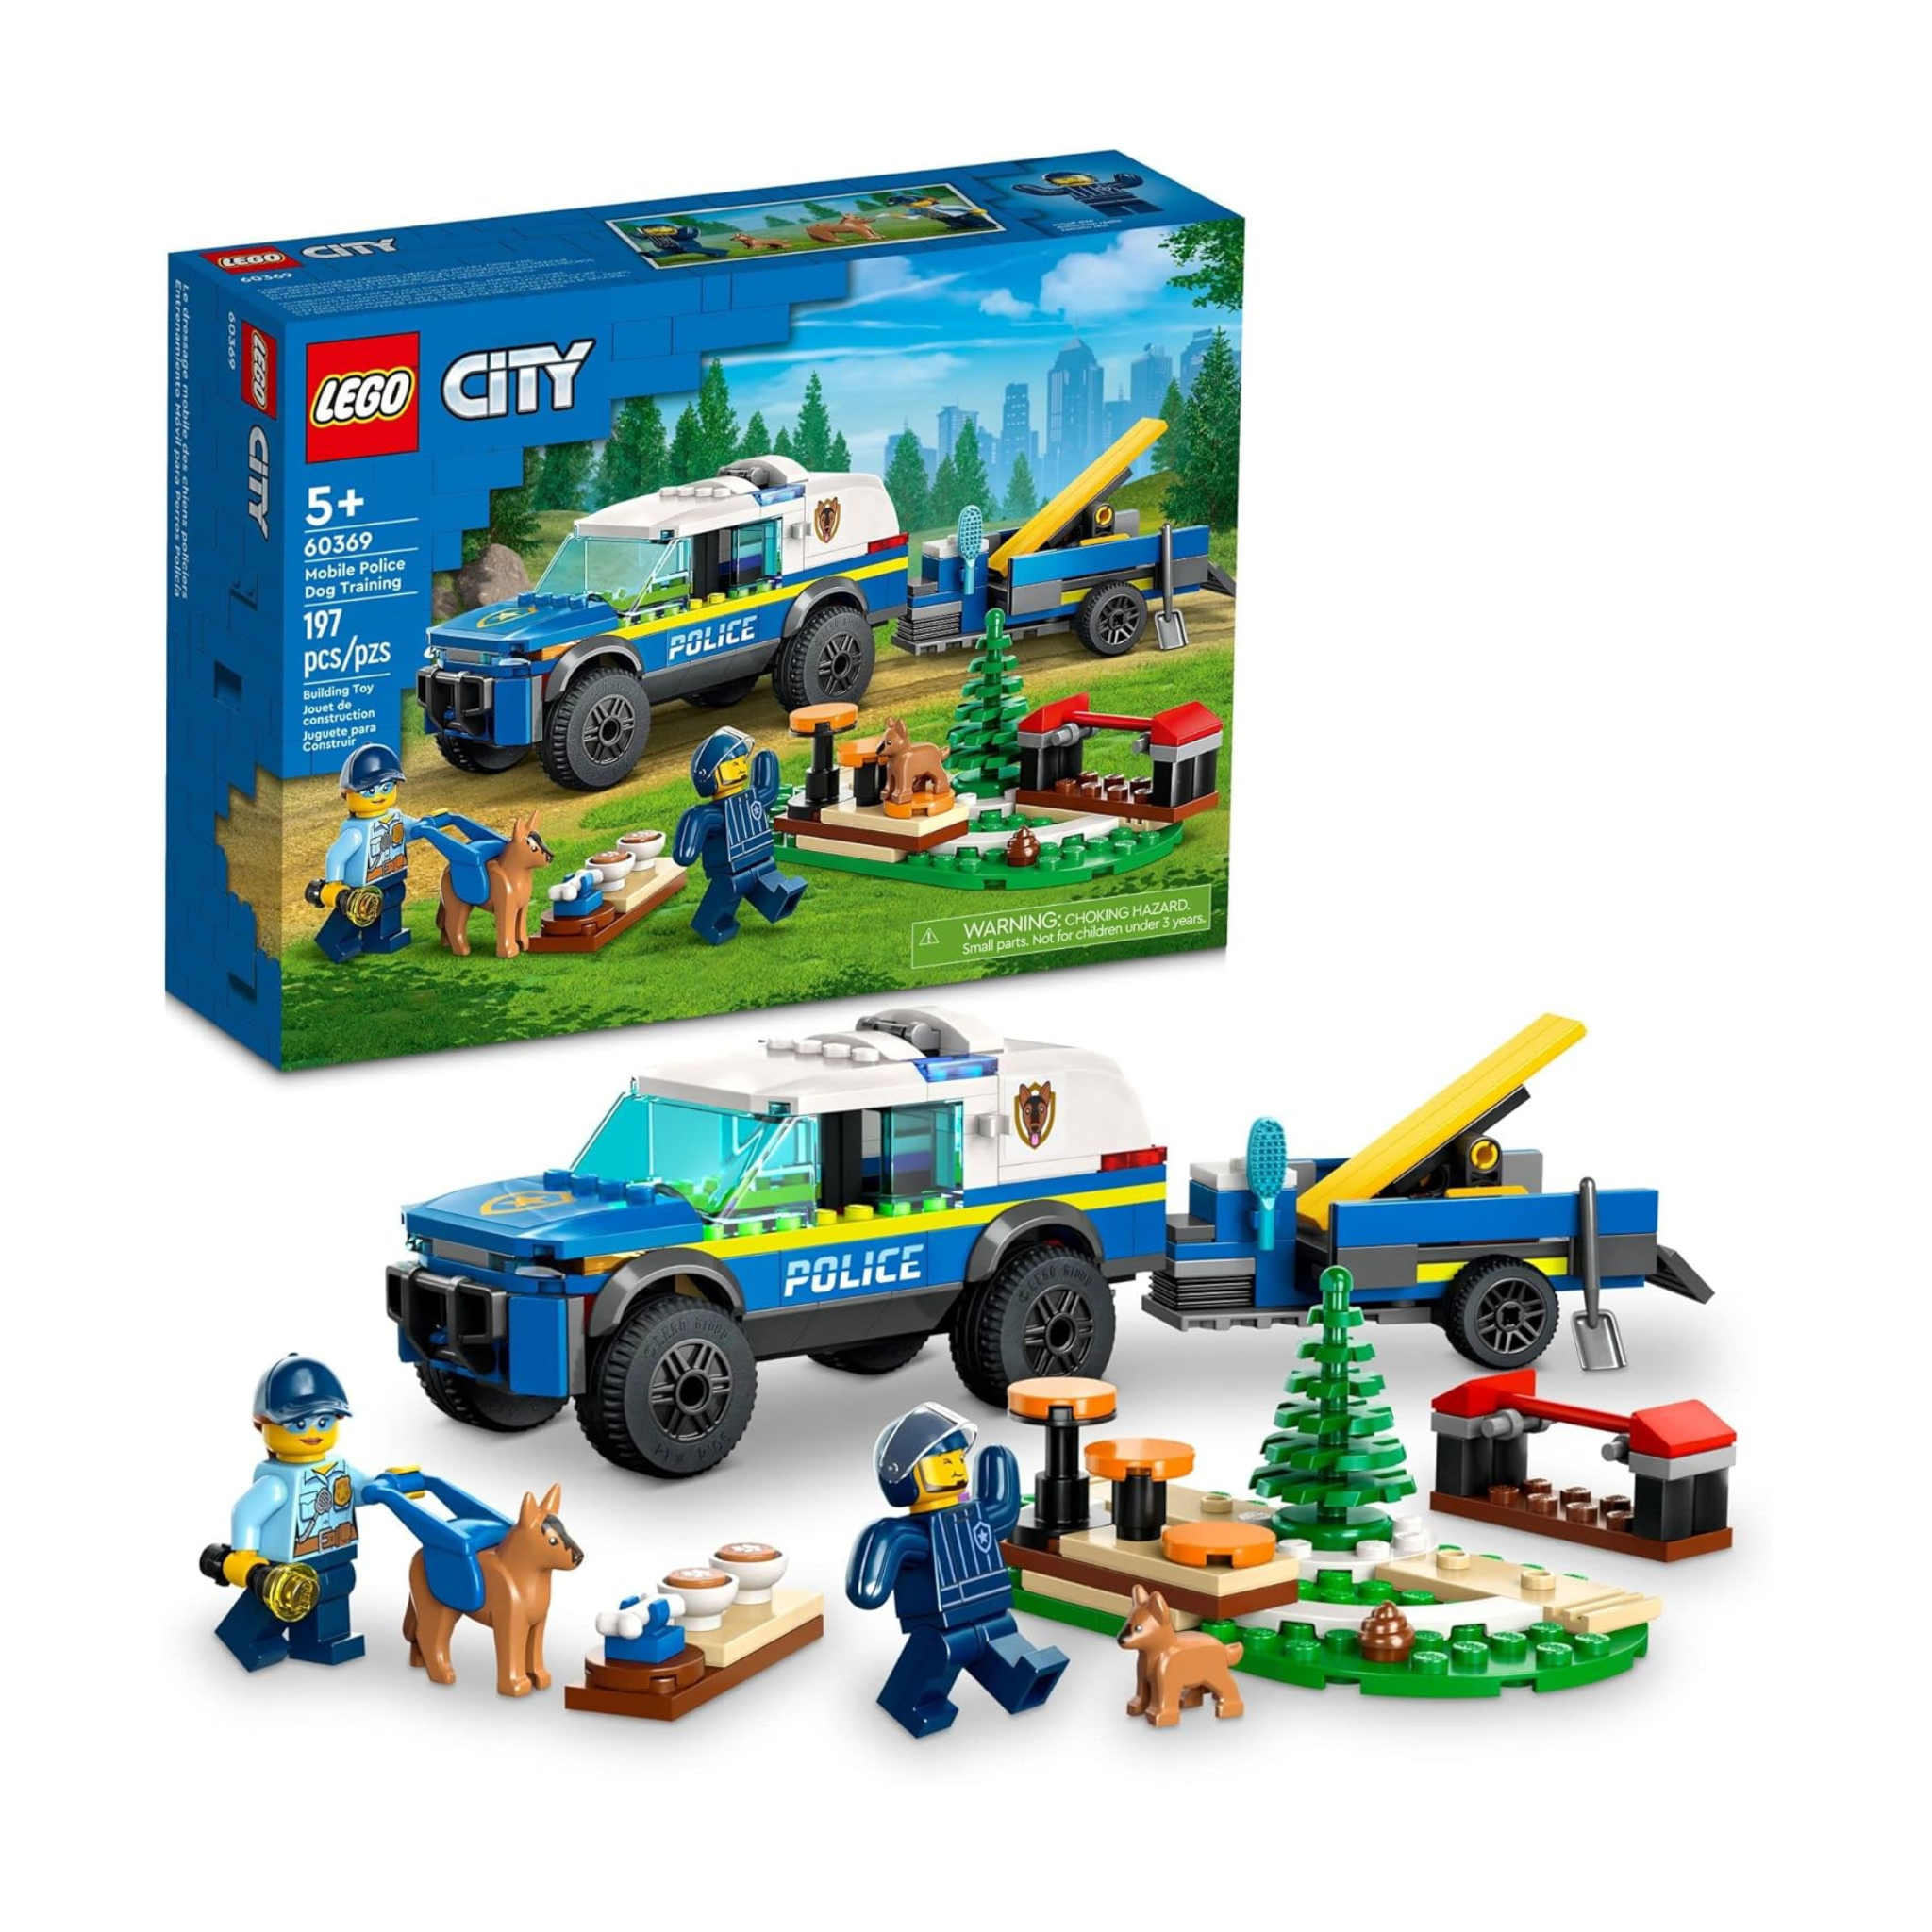 197-Piece LEGO City Mobile Police Dog Training Set w/ Toy Car